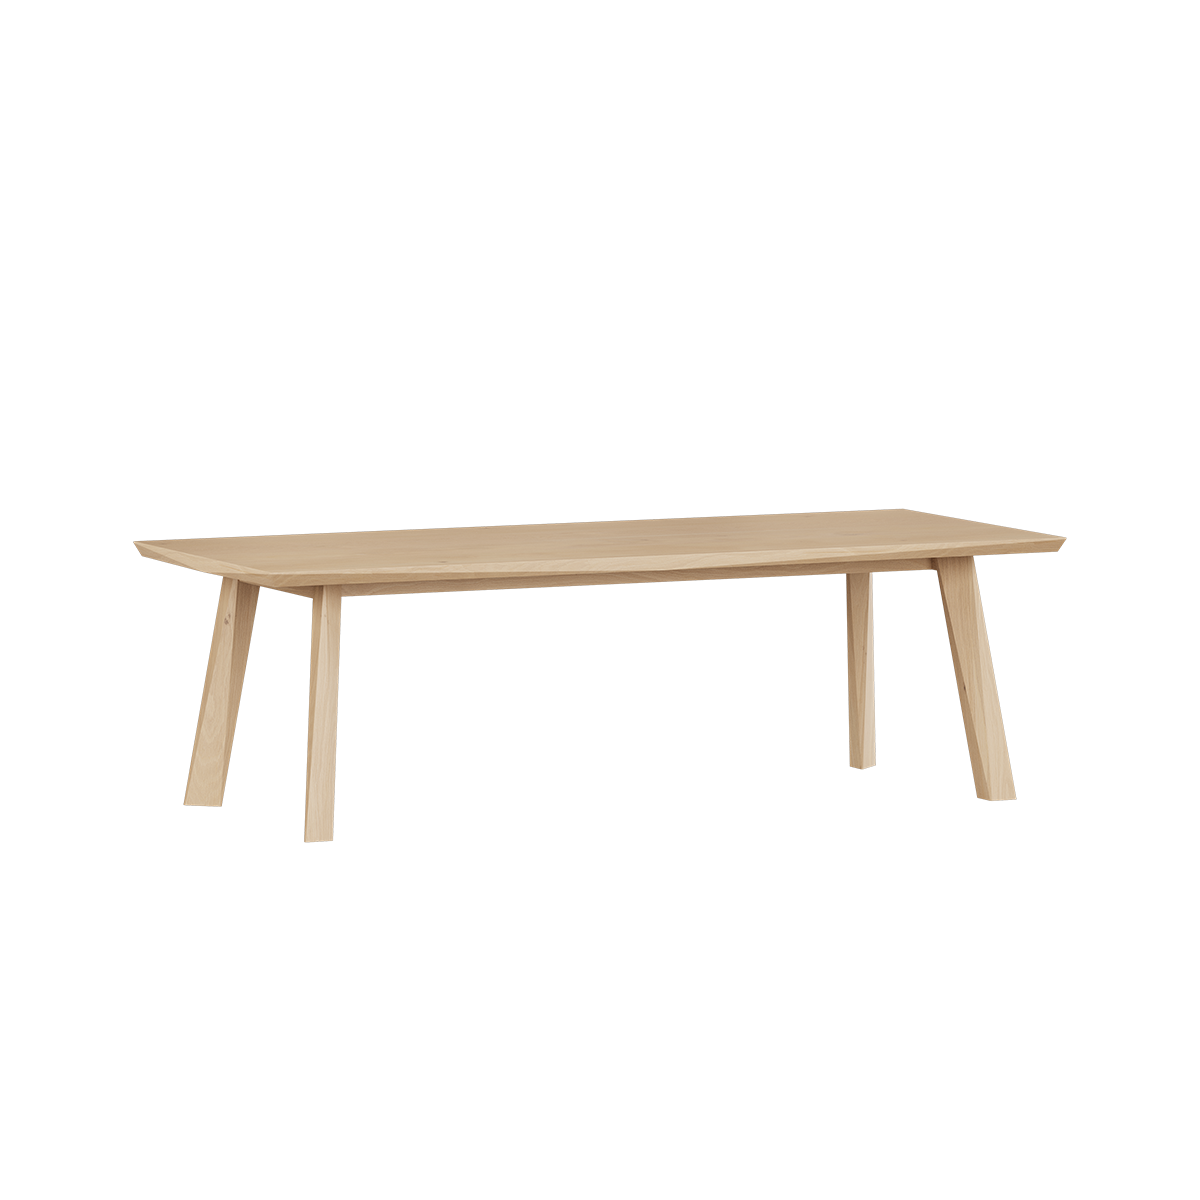 Edge Dining Table - 240x100 cm